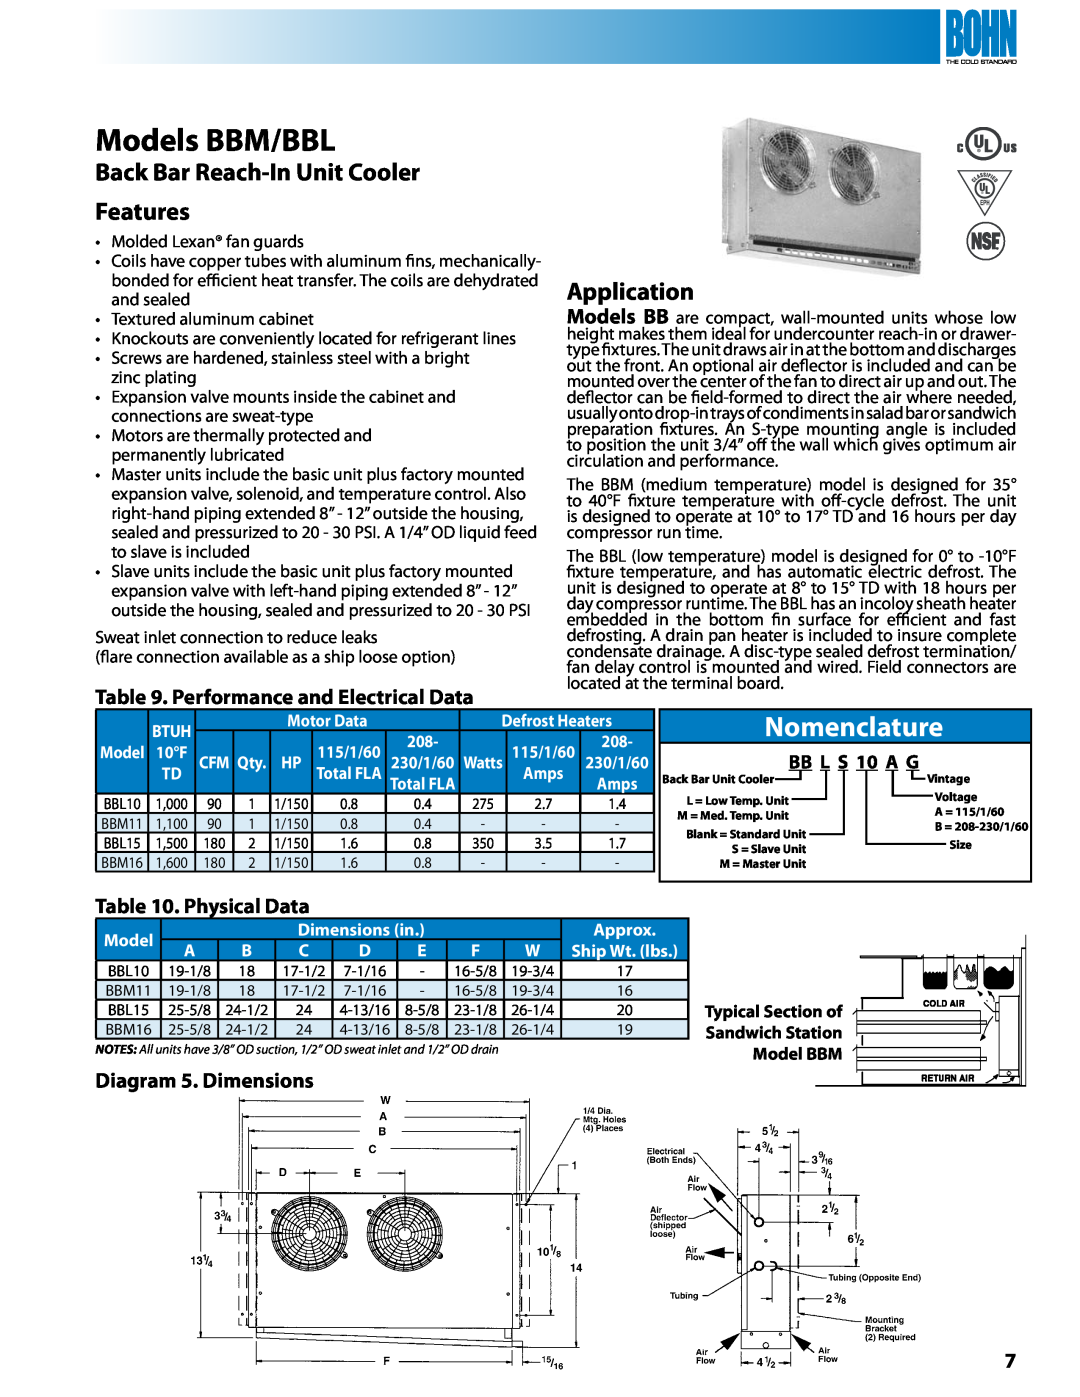 Heatcraft Refrigeration Products RAMK Models BBM/BBL, Back Bar Reach-InUnit Cooler Features, Physical Data, BB L S 10 A G 